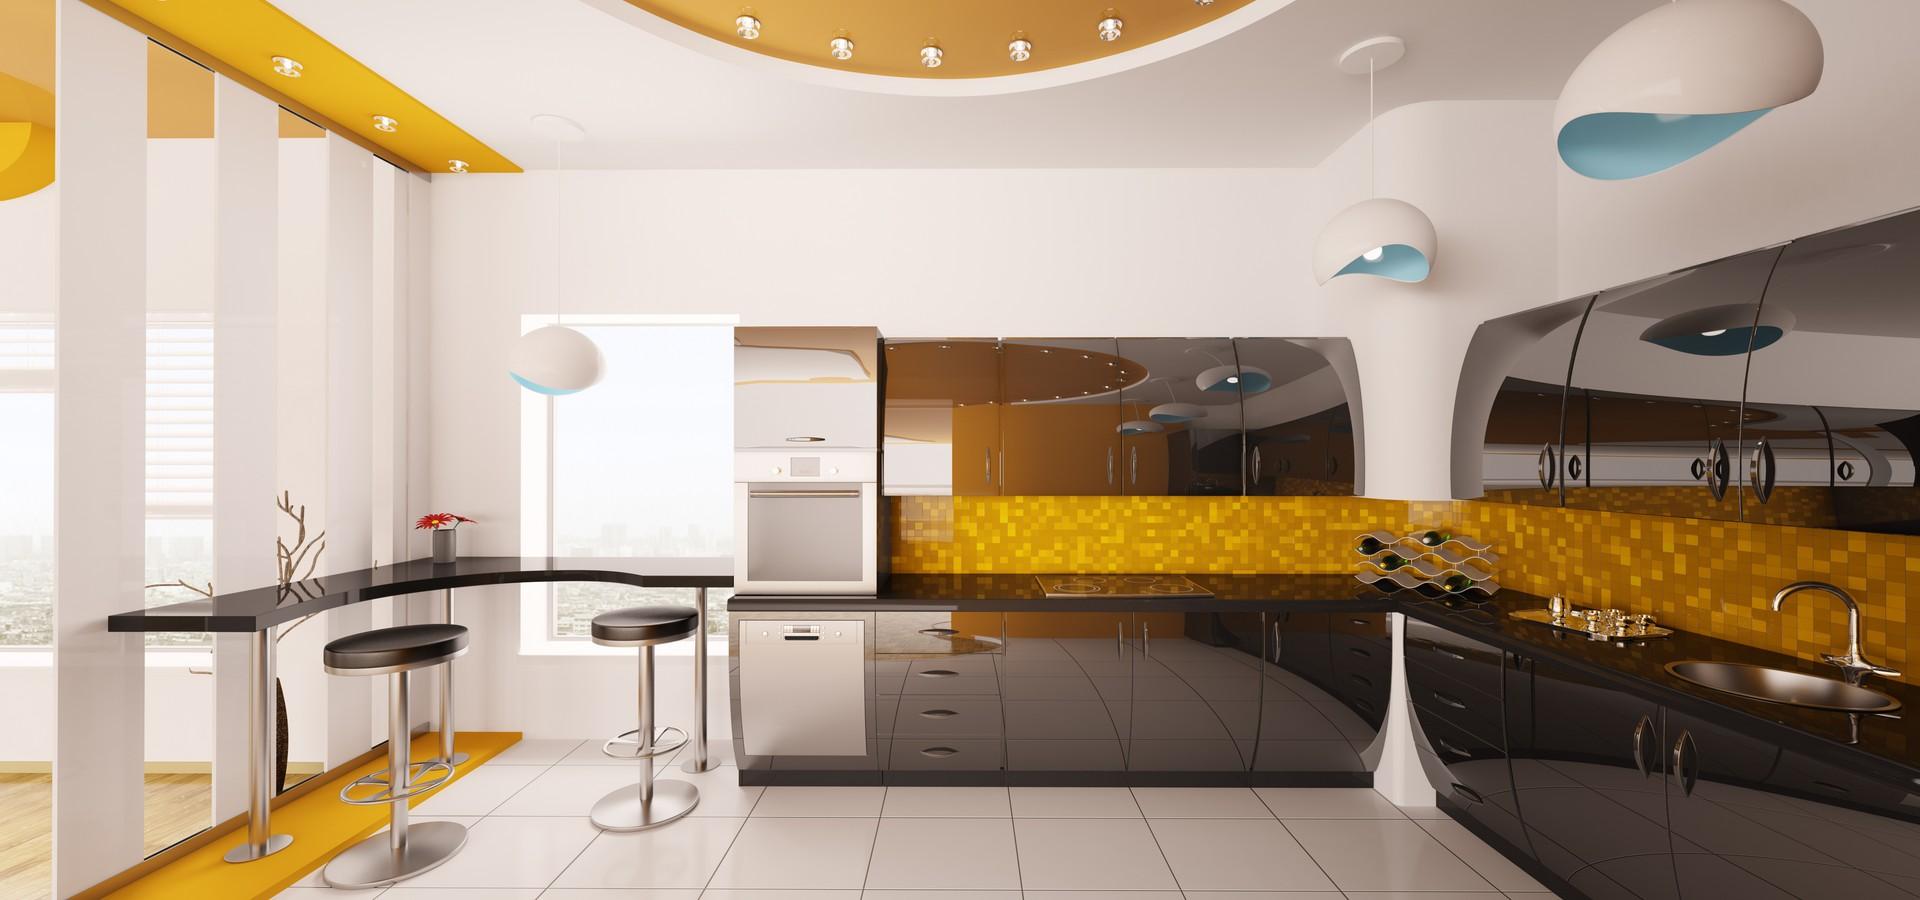 Желтый цвет на кухне в стиле техно